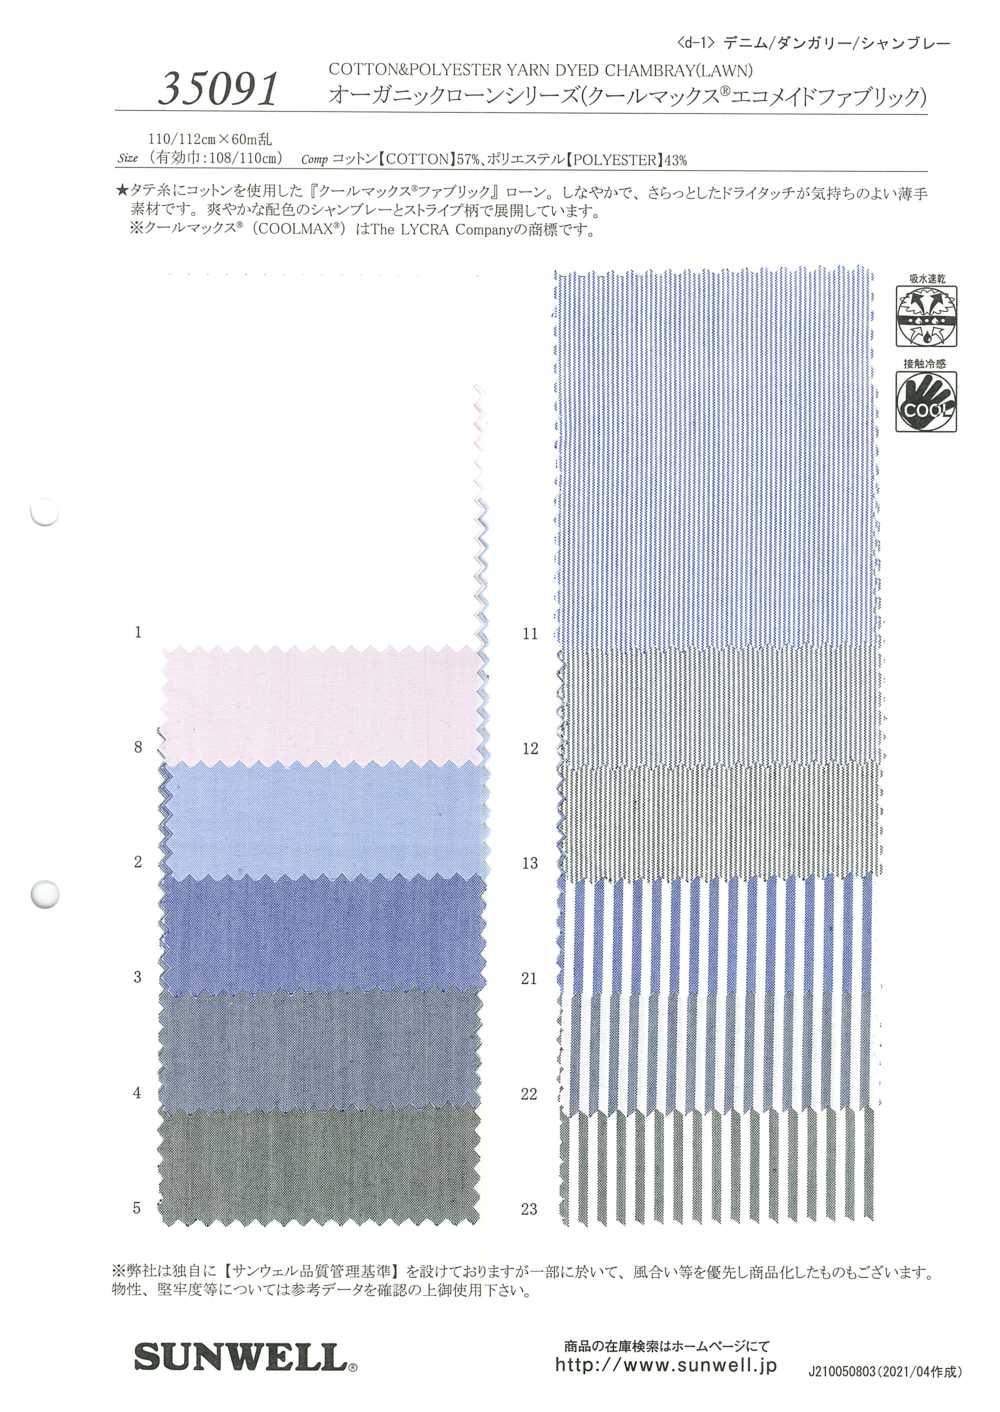 35091 Serie De Césped Orgánico (Tejido Ecológico Coolmax (R))[Fabrica Textil] SUNWELL